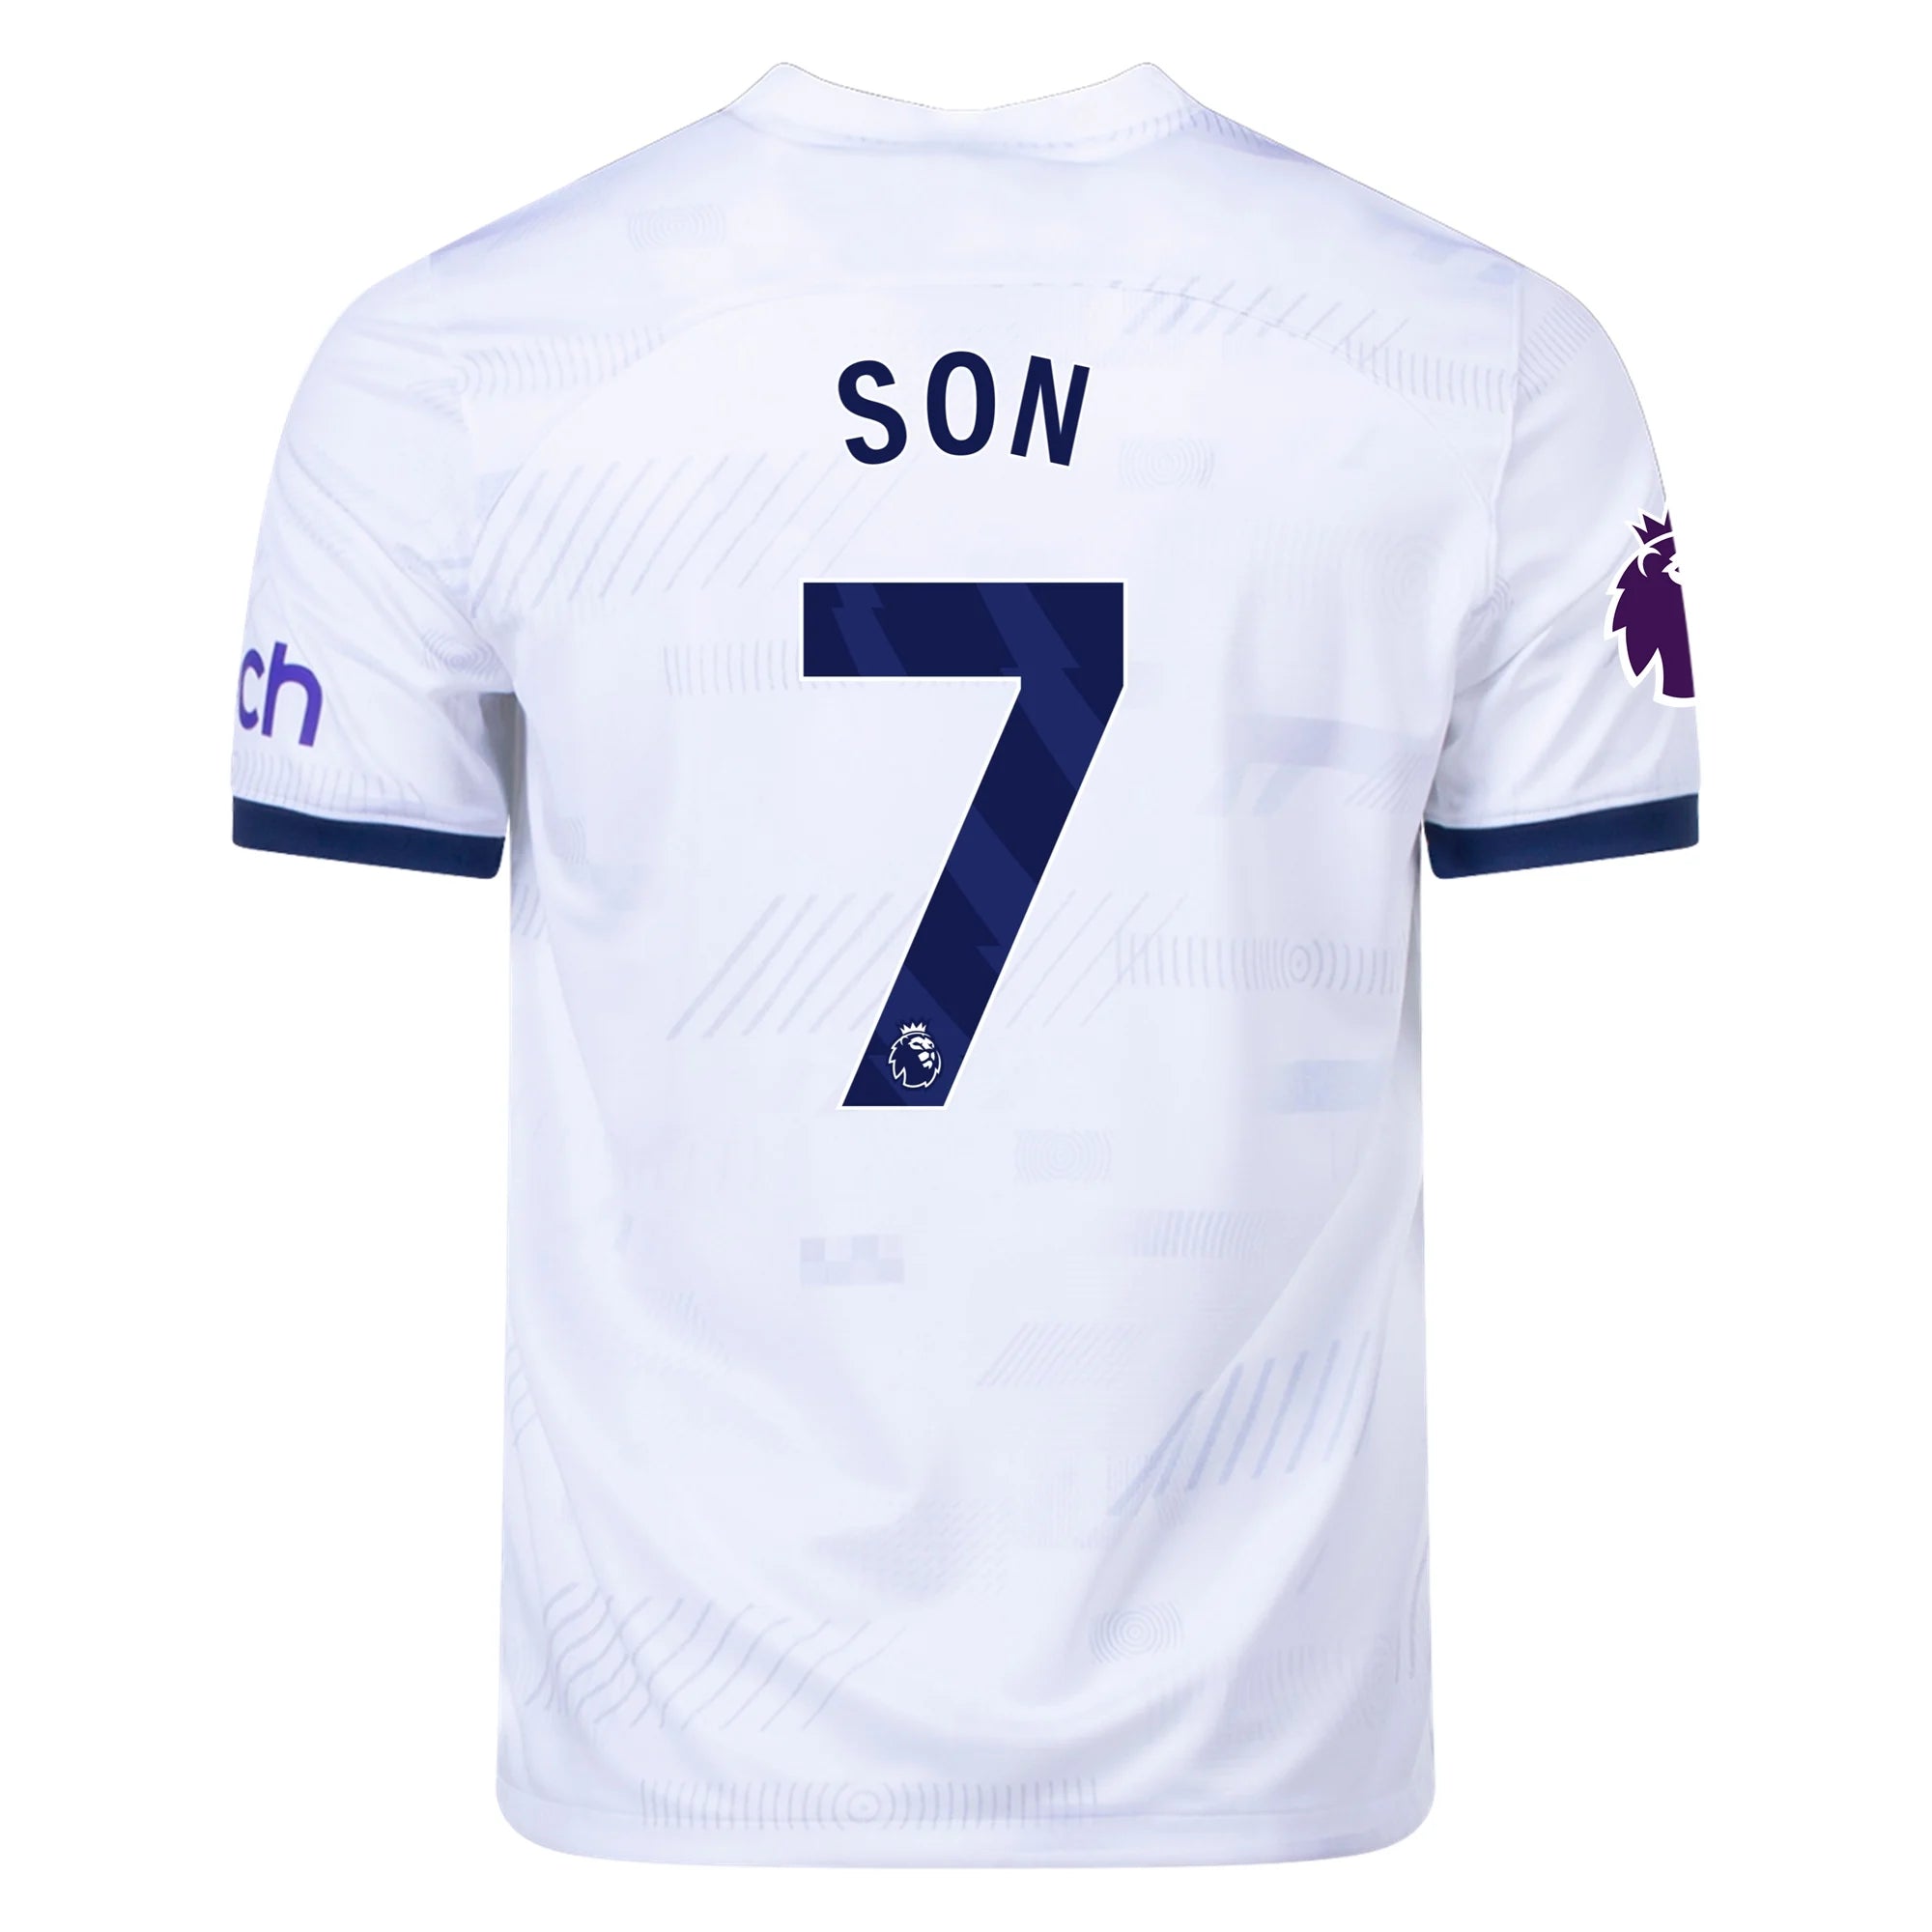 Tottenham Hotspur Men's Soccer T-Shirt.